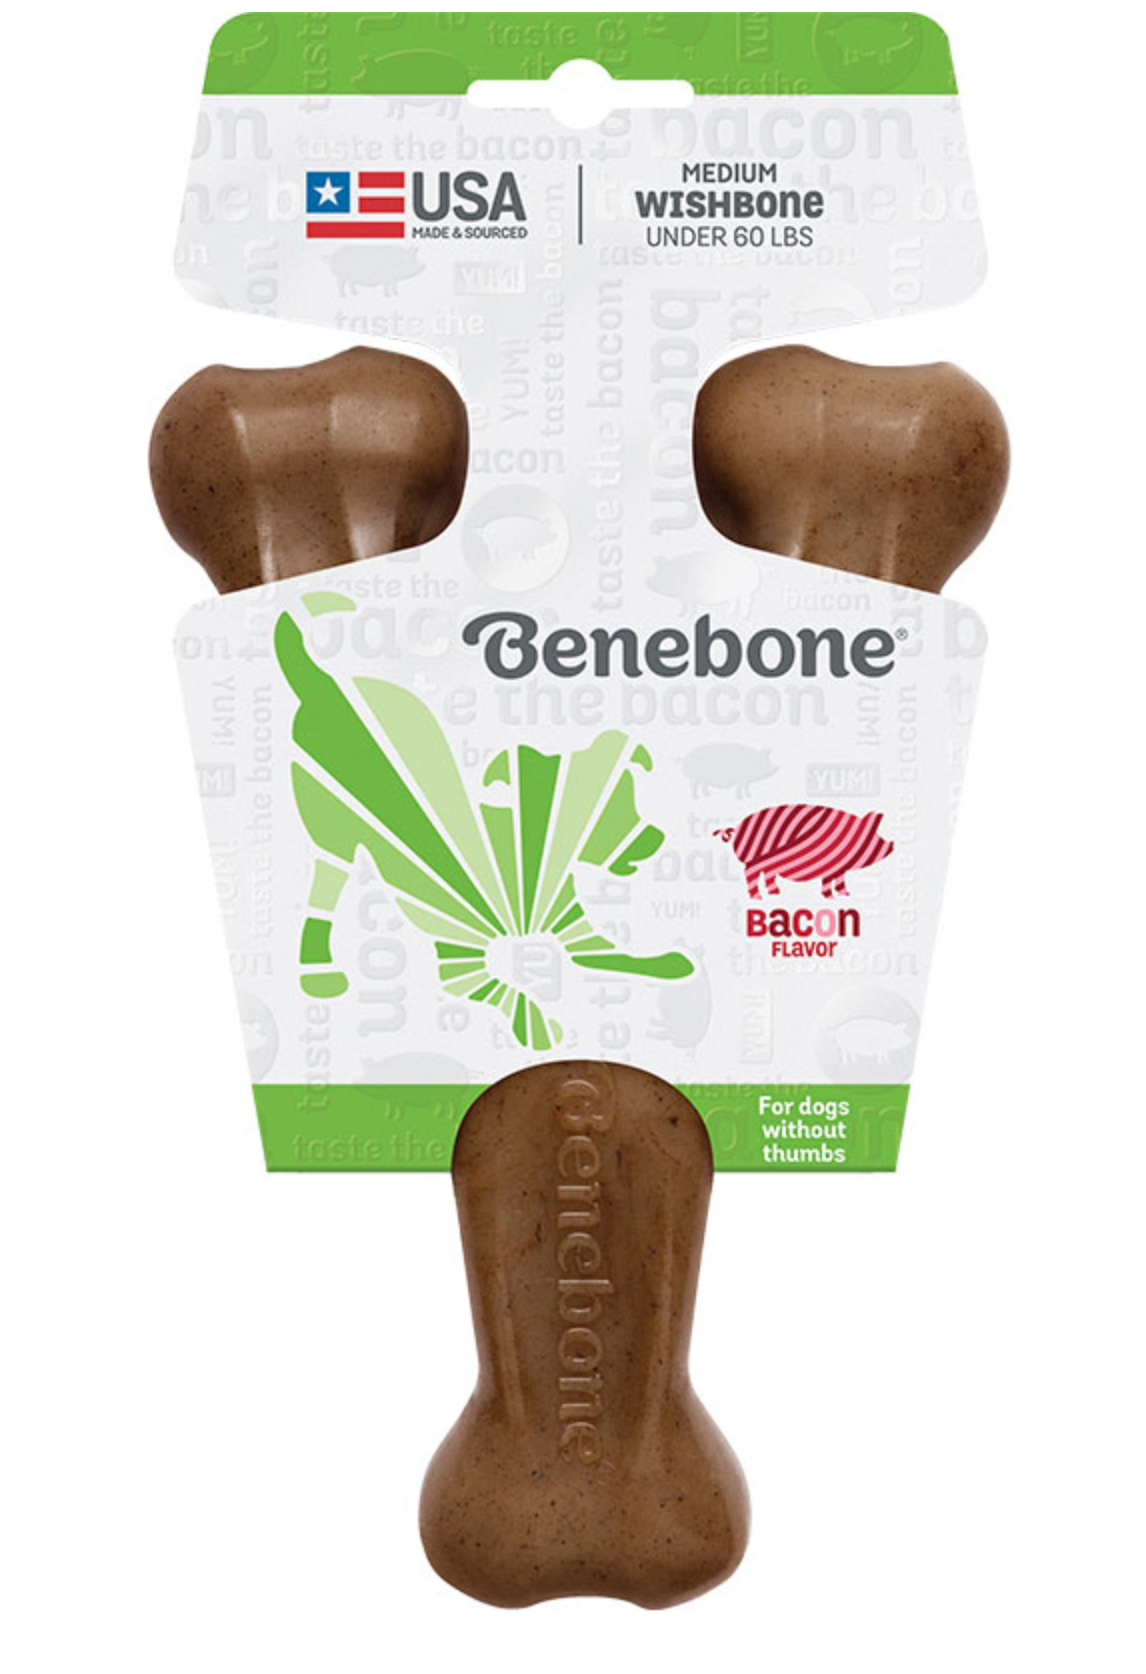 Benebone Wishbone Tough Dog Chew Toy - Bacon Flavor/Small